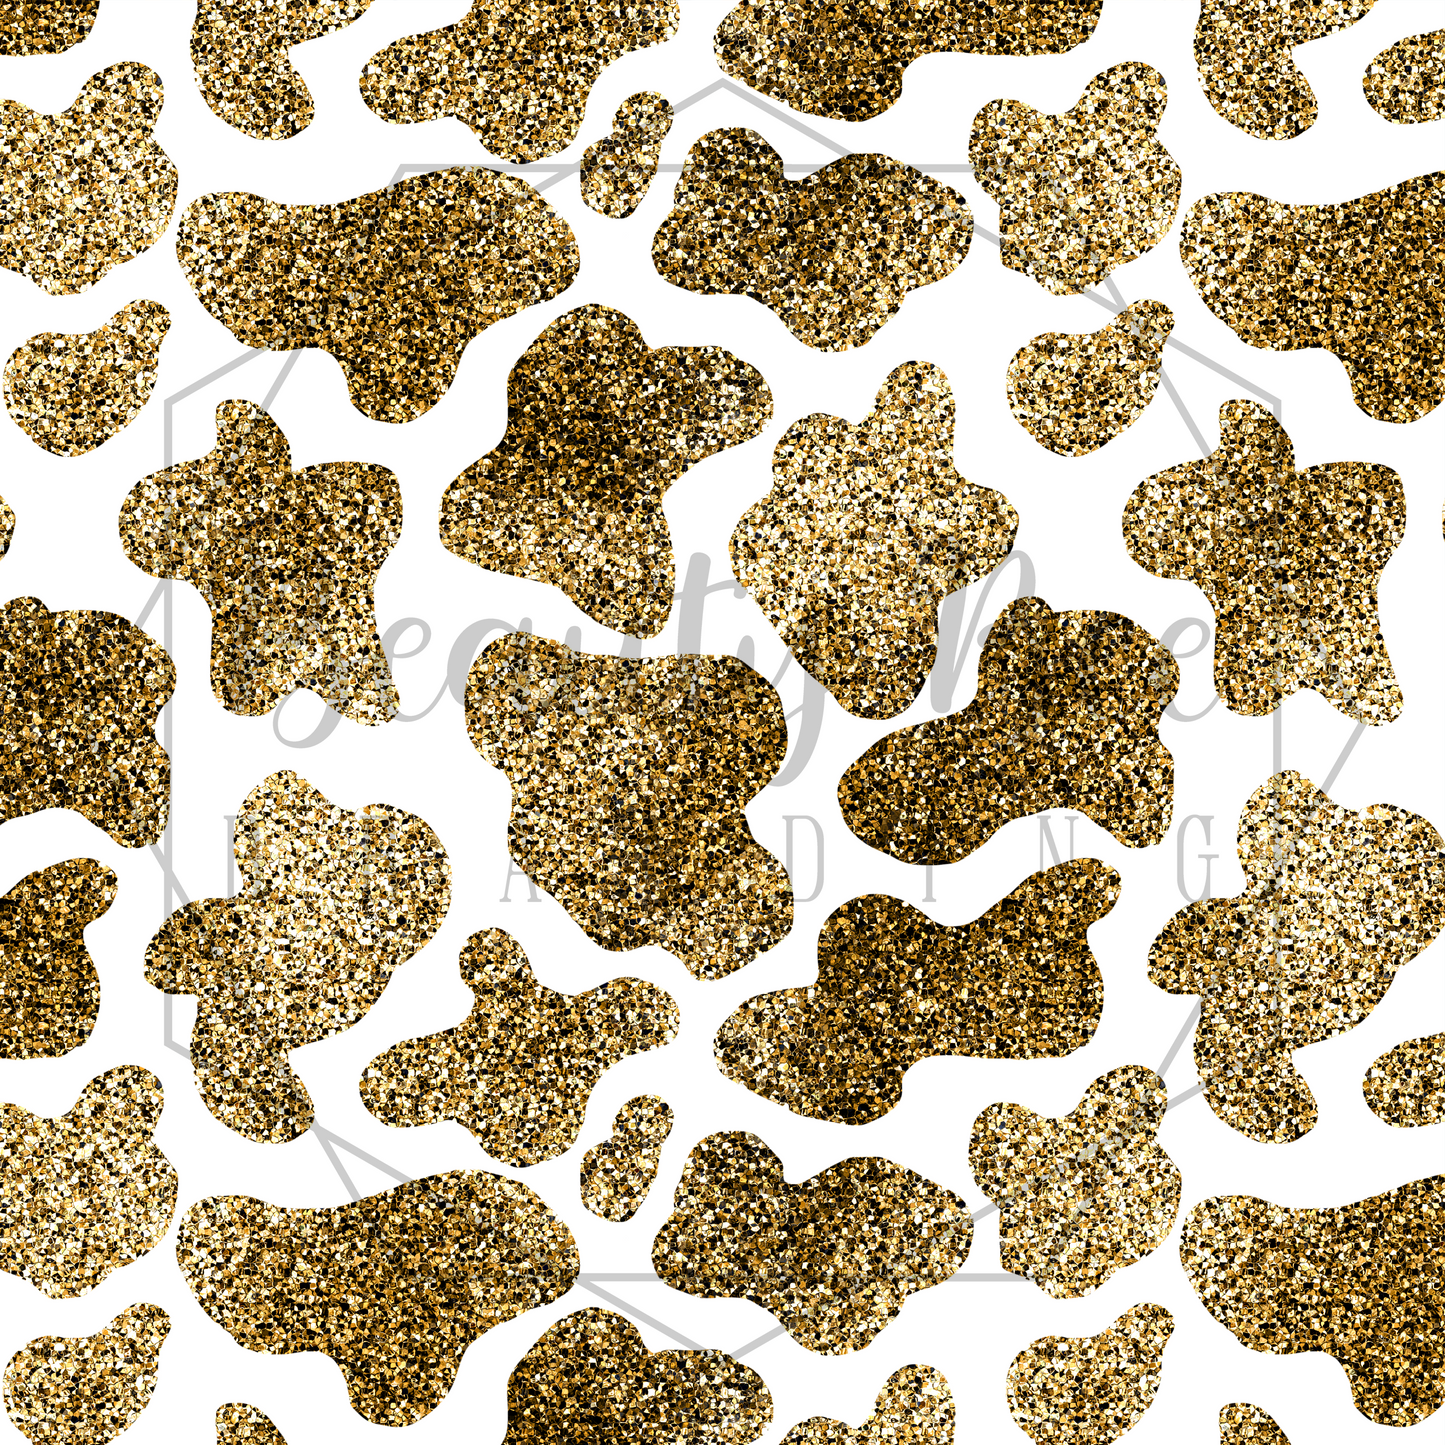 Cow Glitter Gold Spots SEAMLESS PATTERN